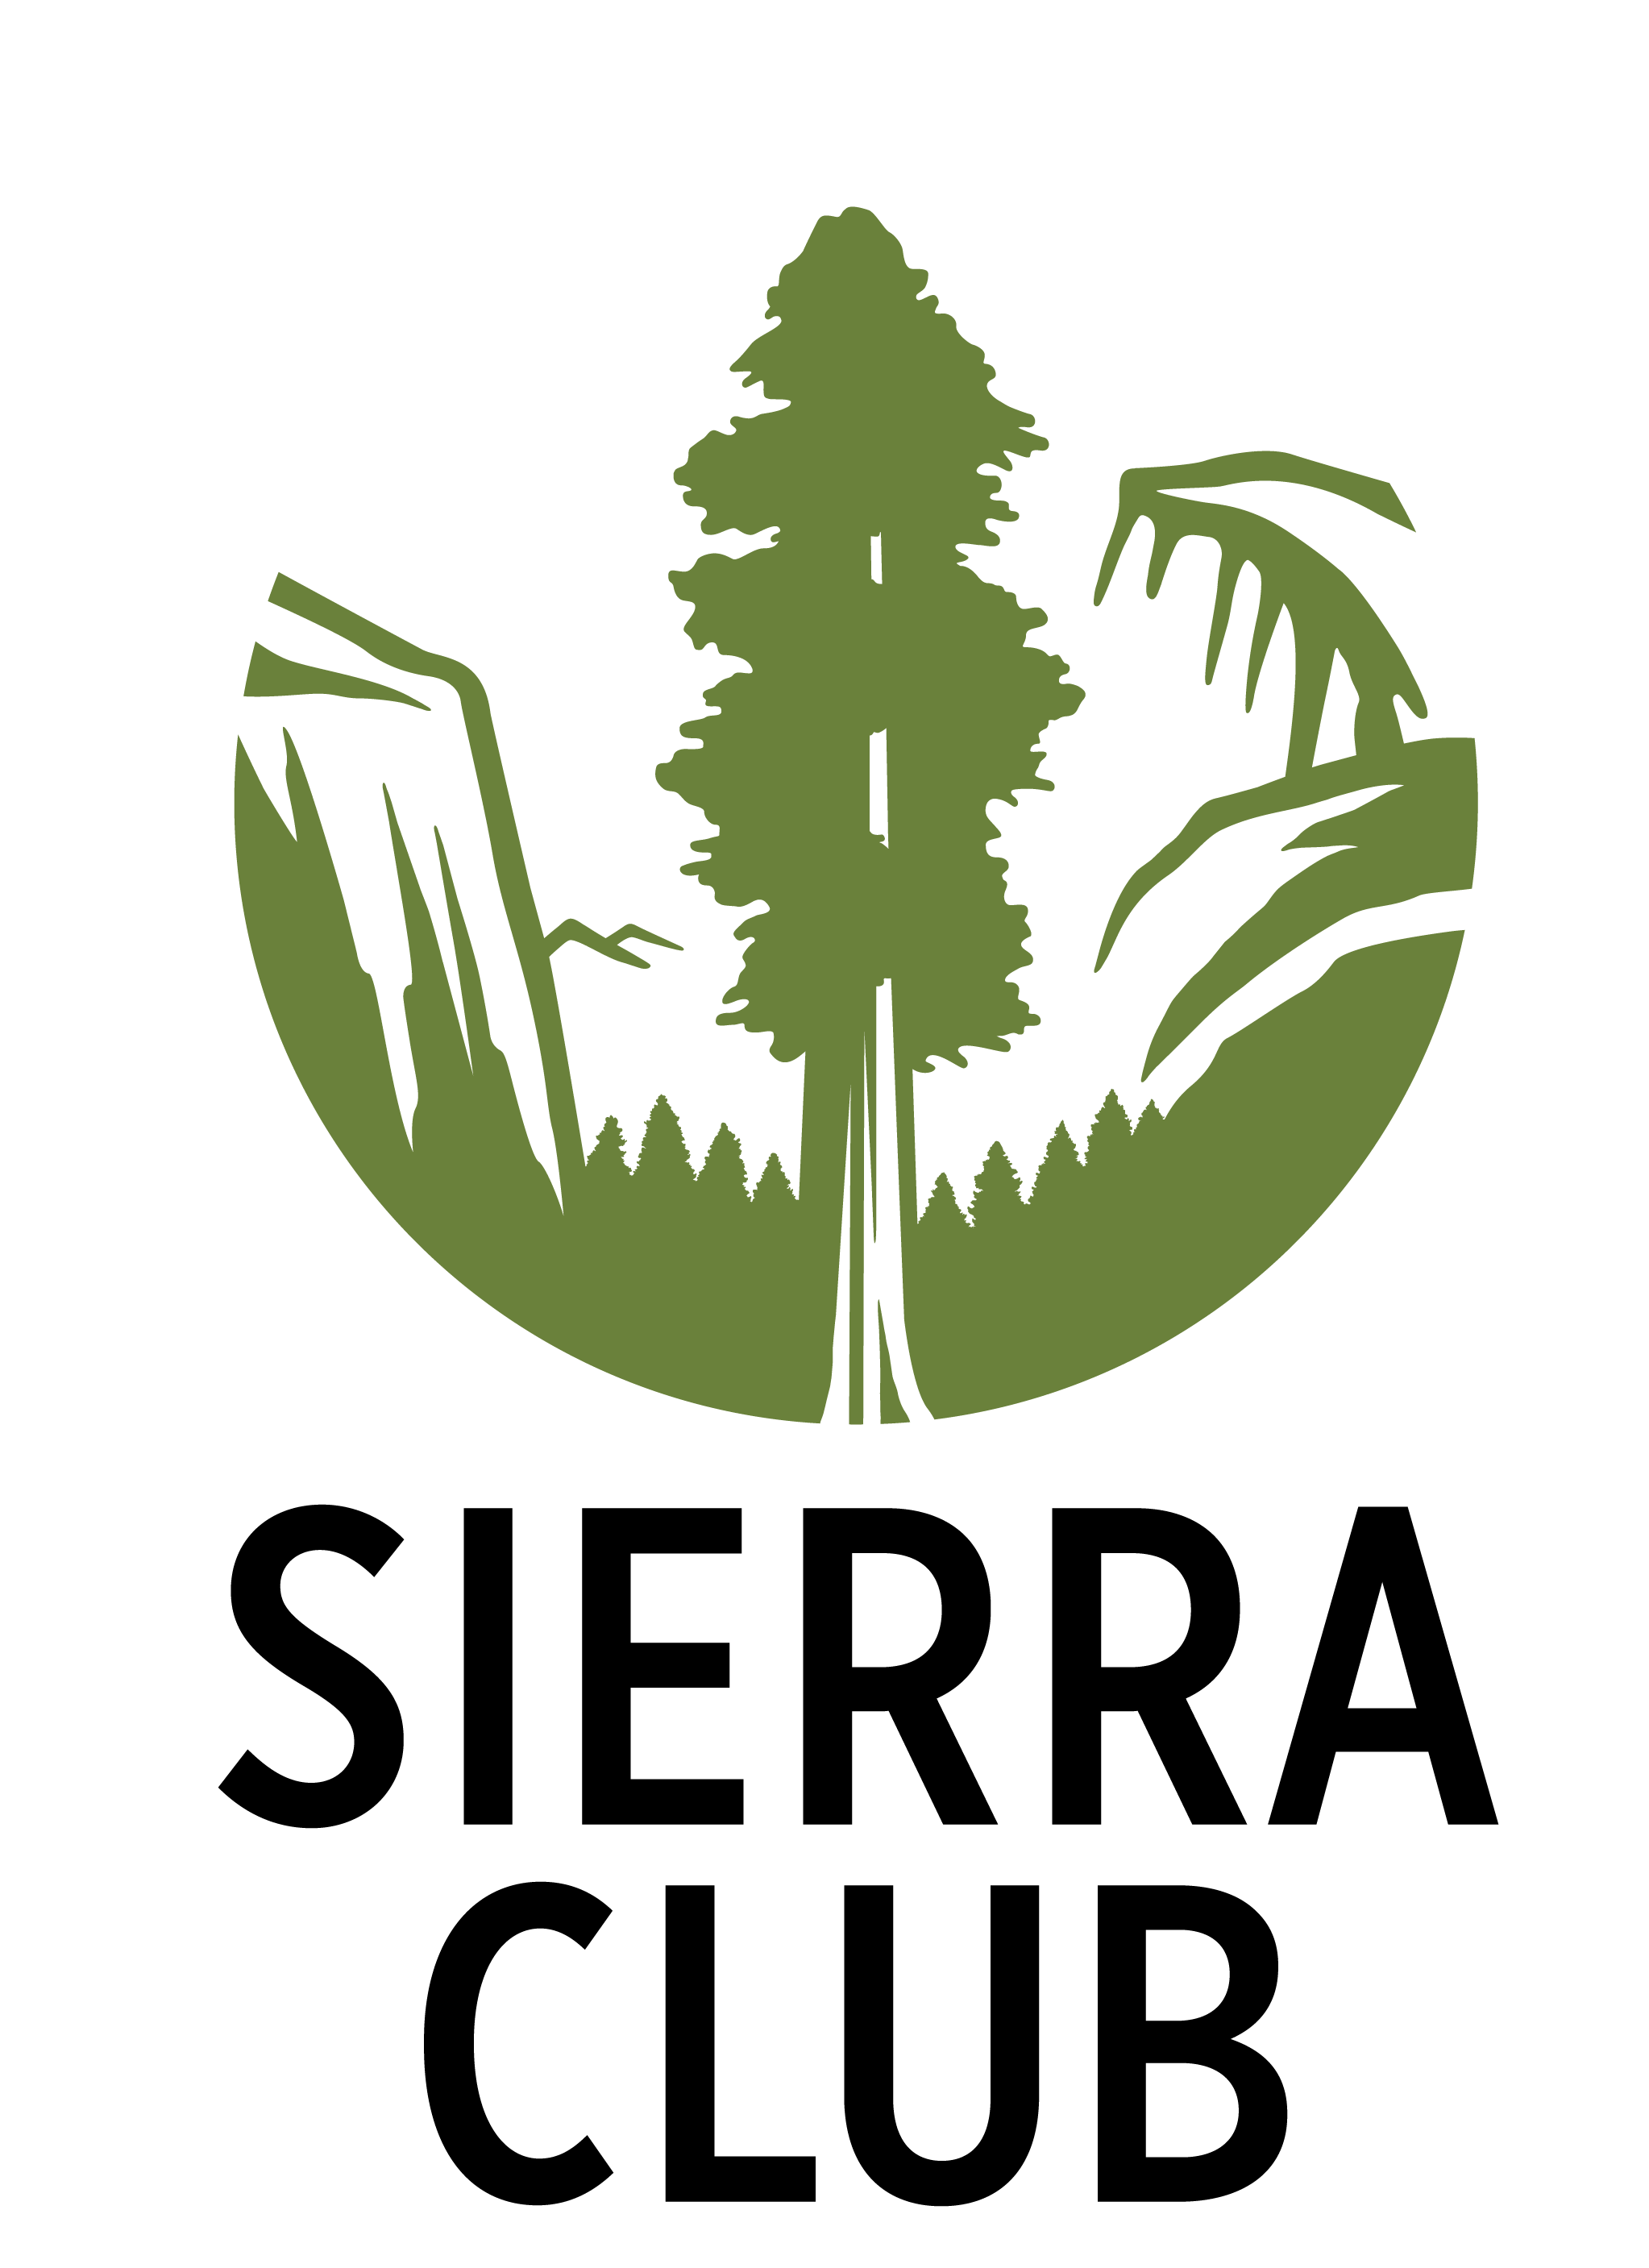 Sierra Club logo - vertical logo in color